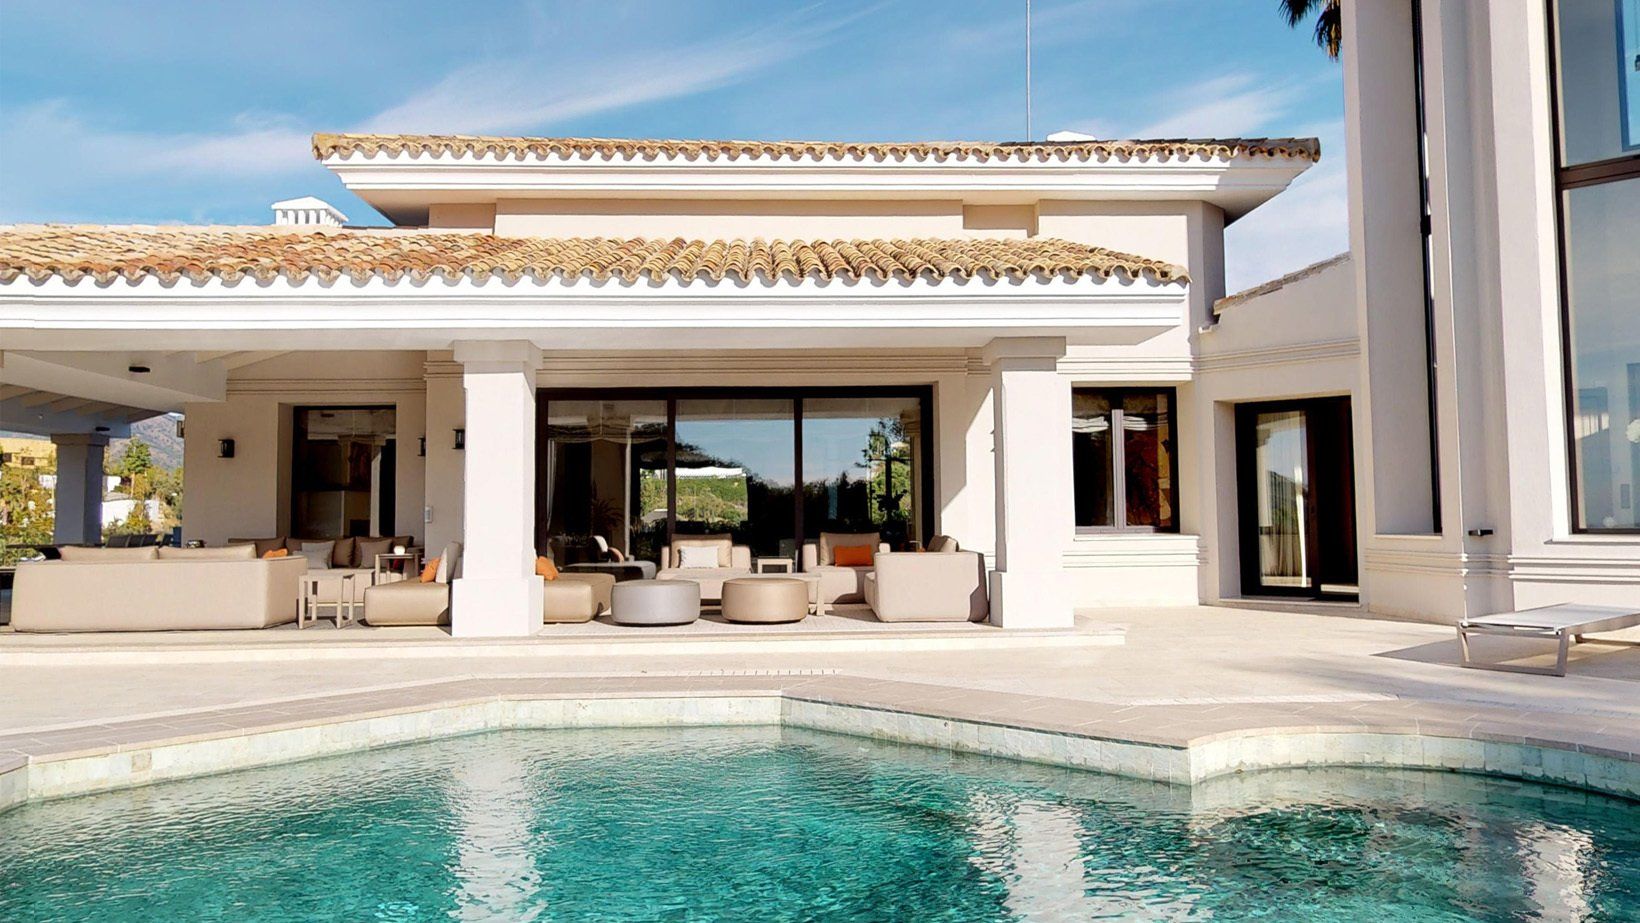 interior design project in La Zagaleta Marbella Spain - image of  terrace area with Expormim outdoor seating